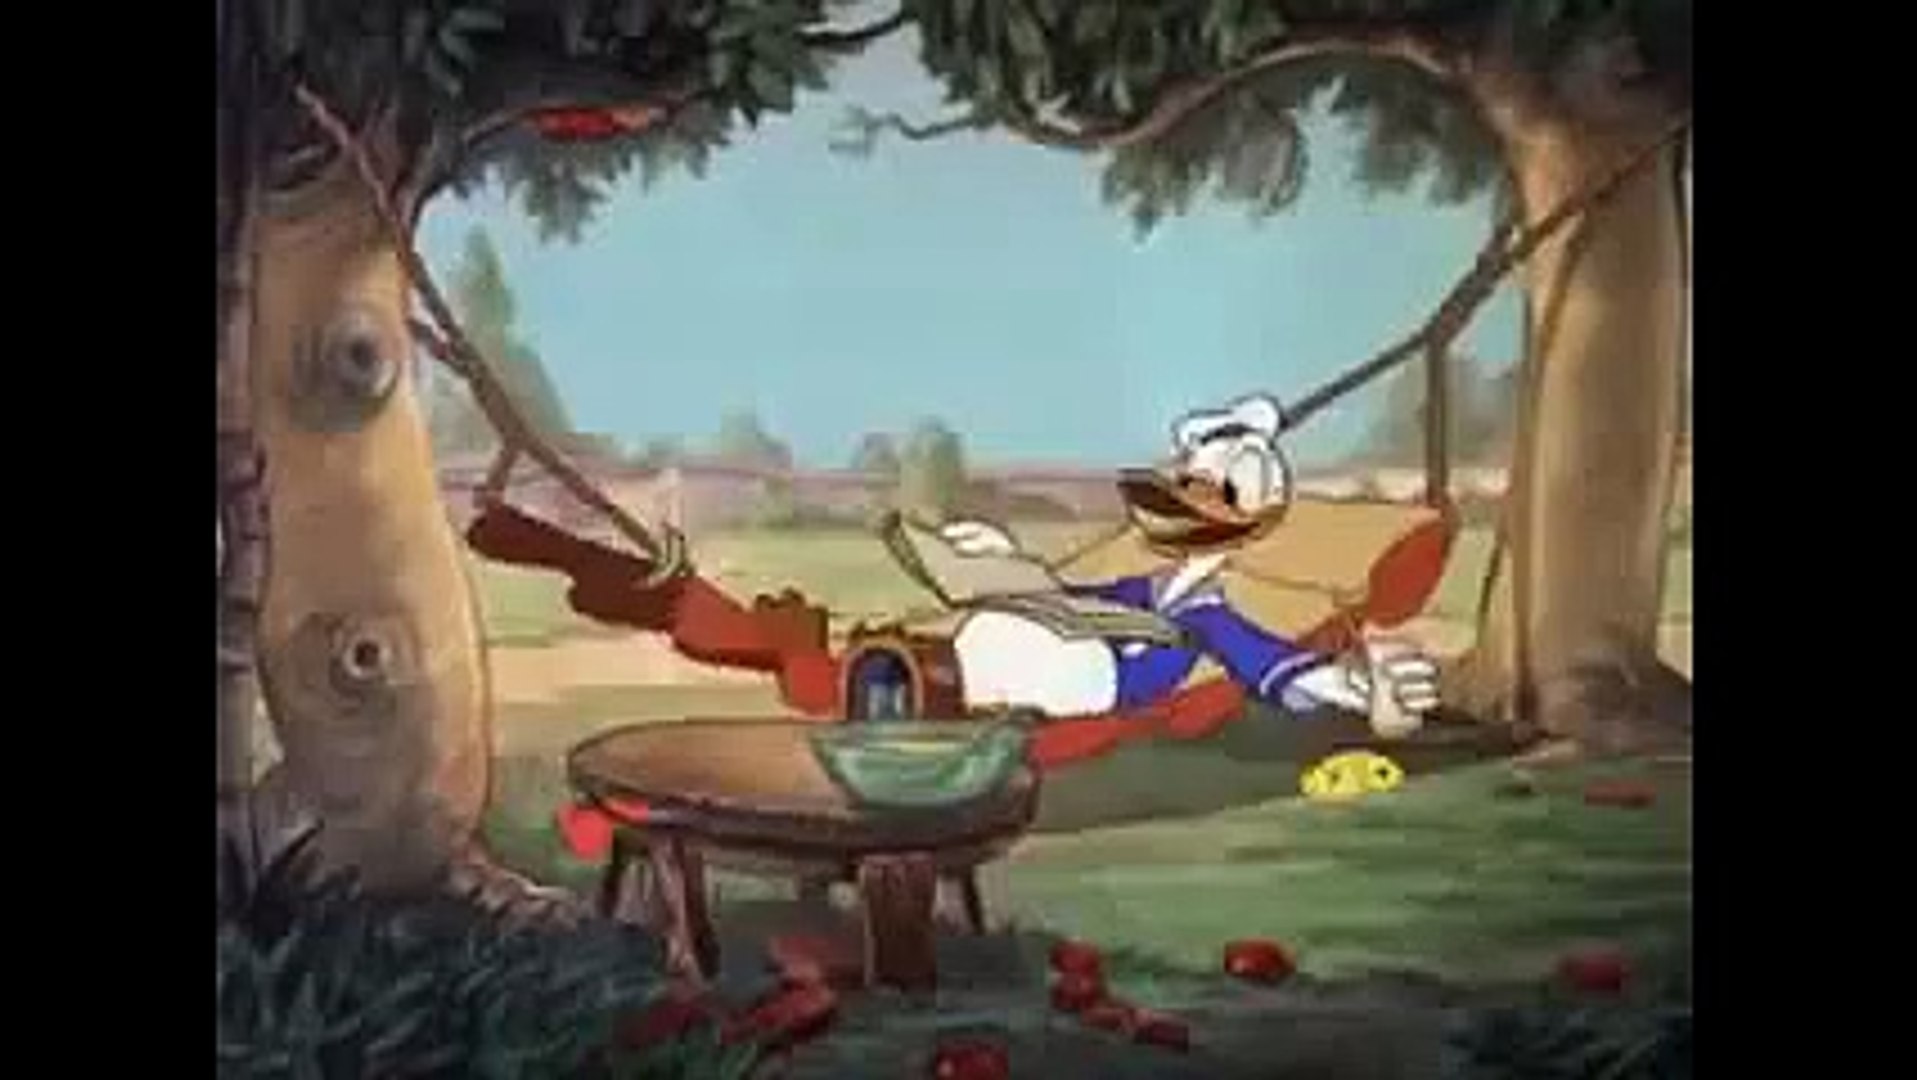 xxxx Donald Duck Walt Disney Cartoonxxxx Donald Duck de Walt Disney Cartoon  xxx - video Dailymotion